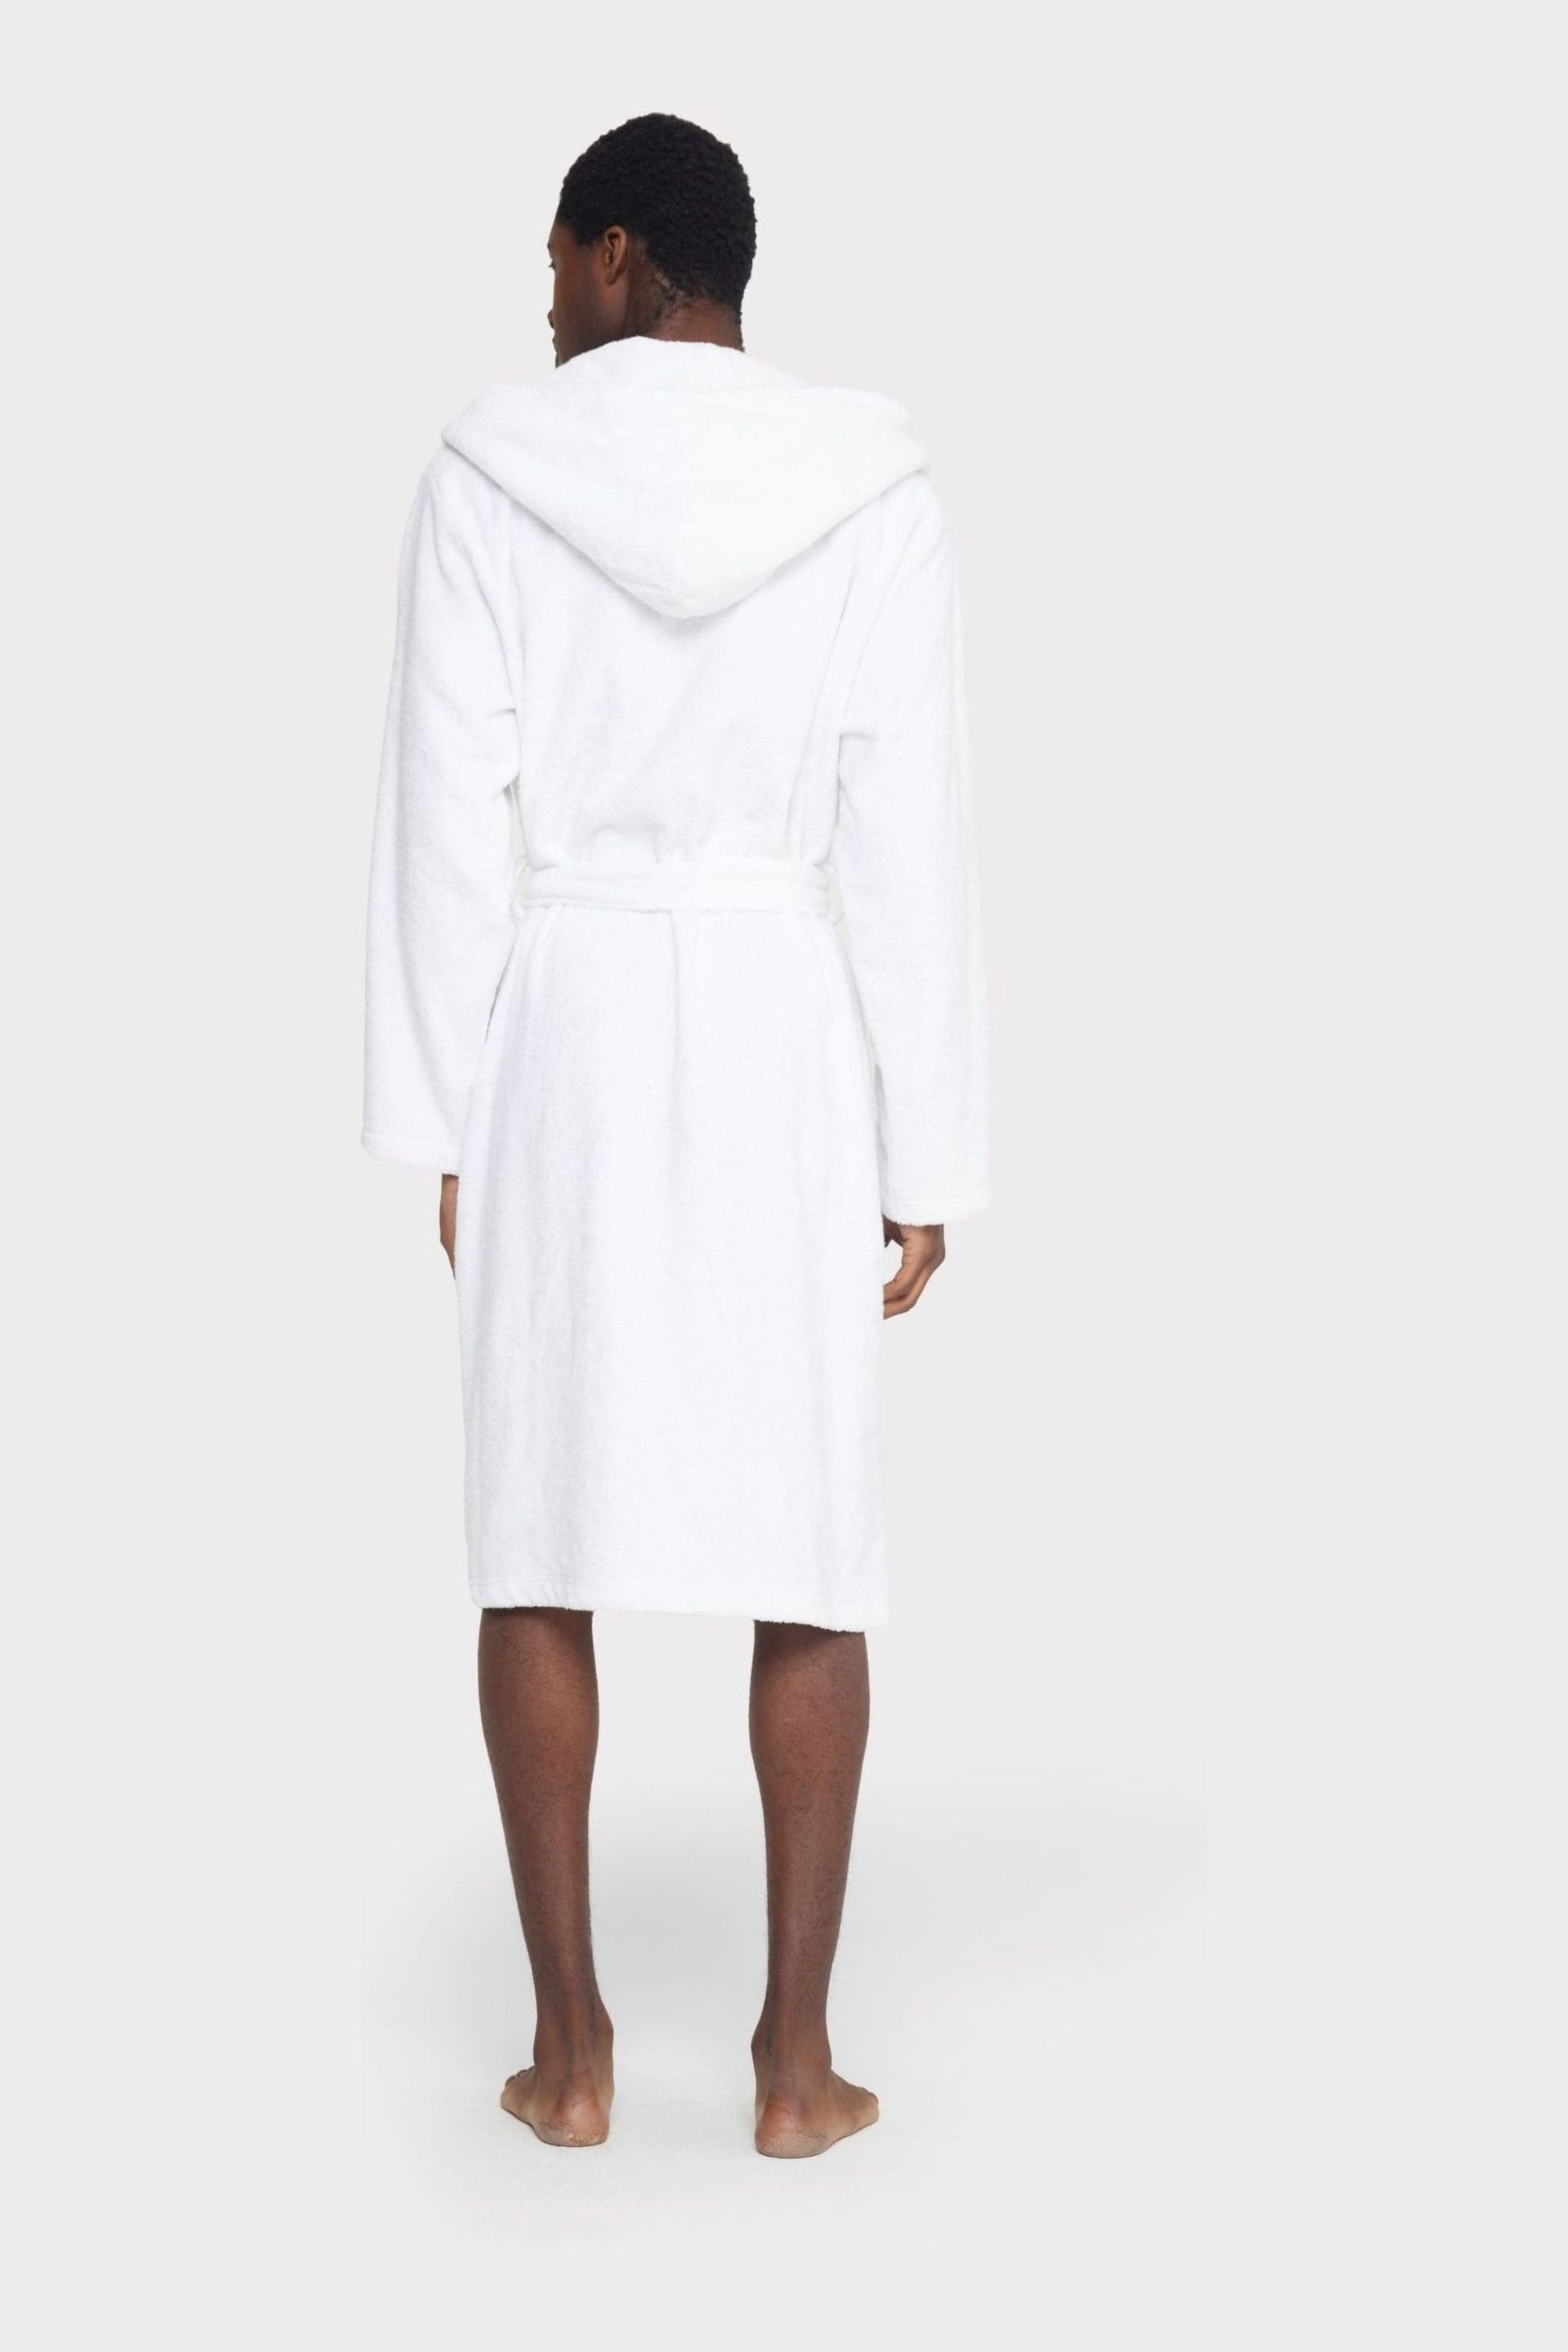 Chelsea Peers White Mens Premium Towelling Dressing Gown - Image 2 of 5